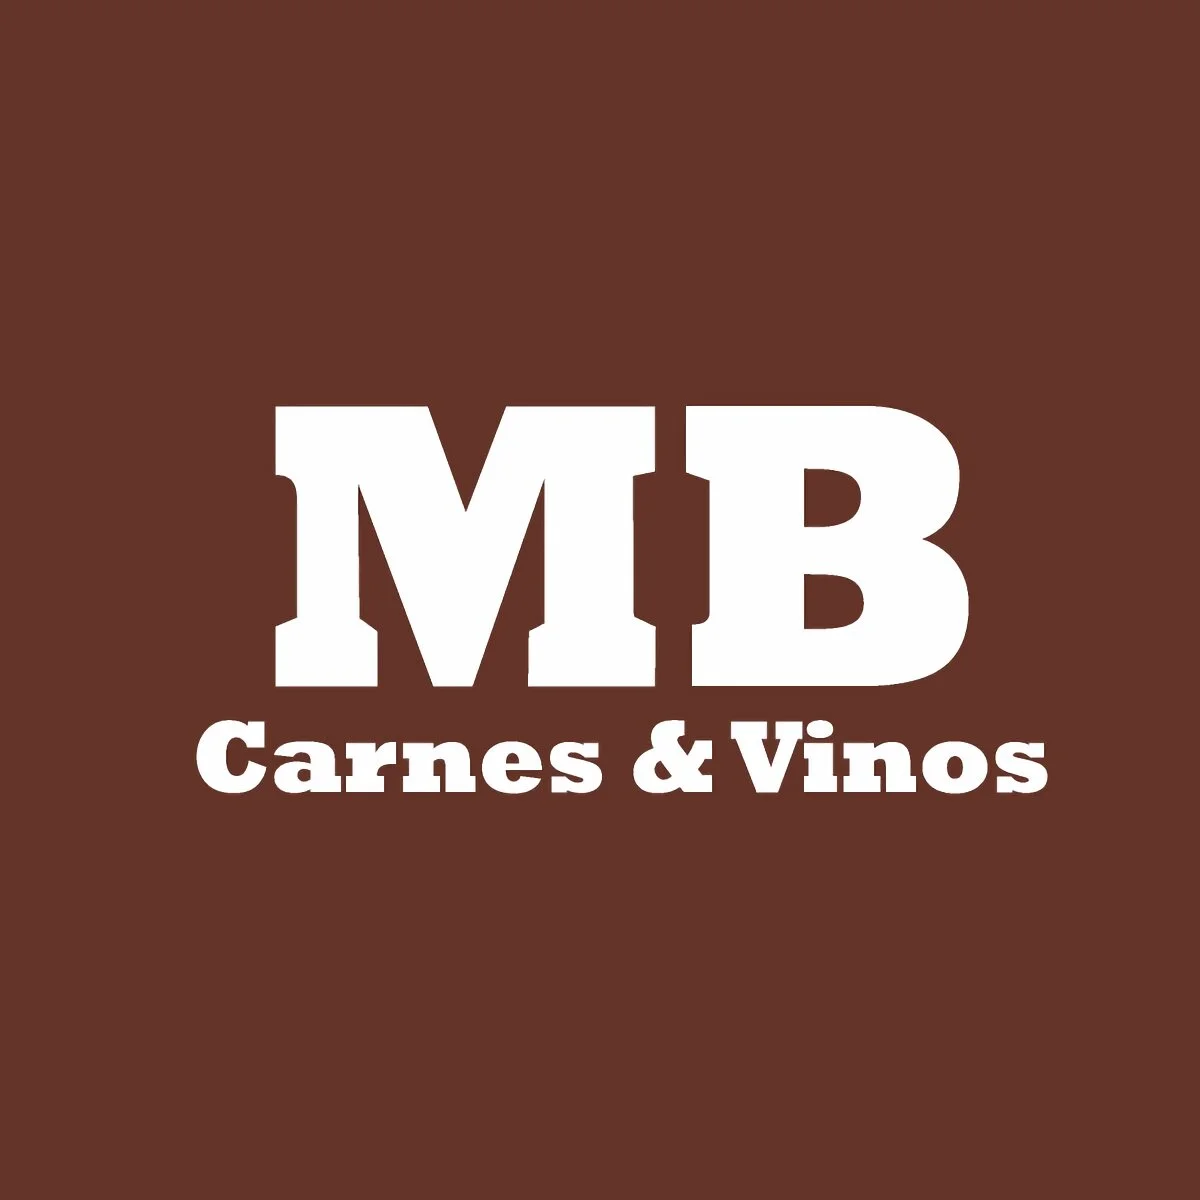 MB carnes y vinos-6998